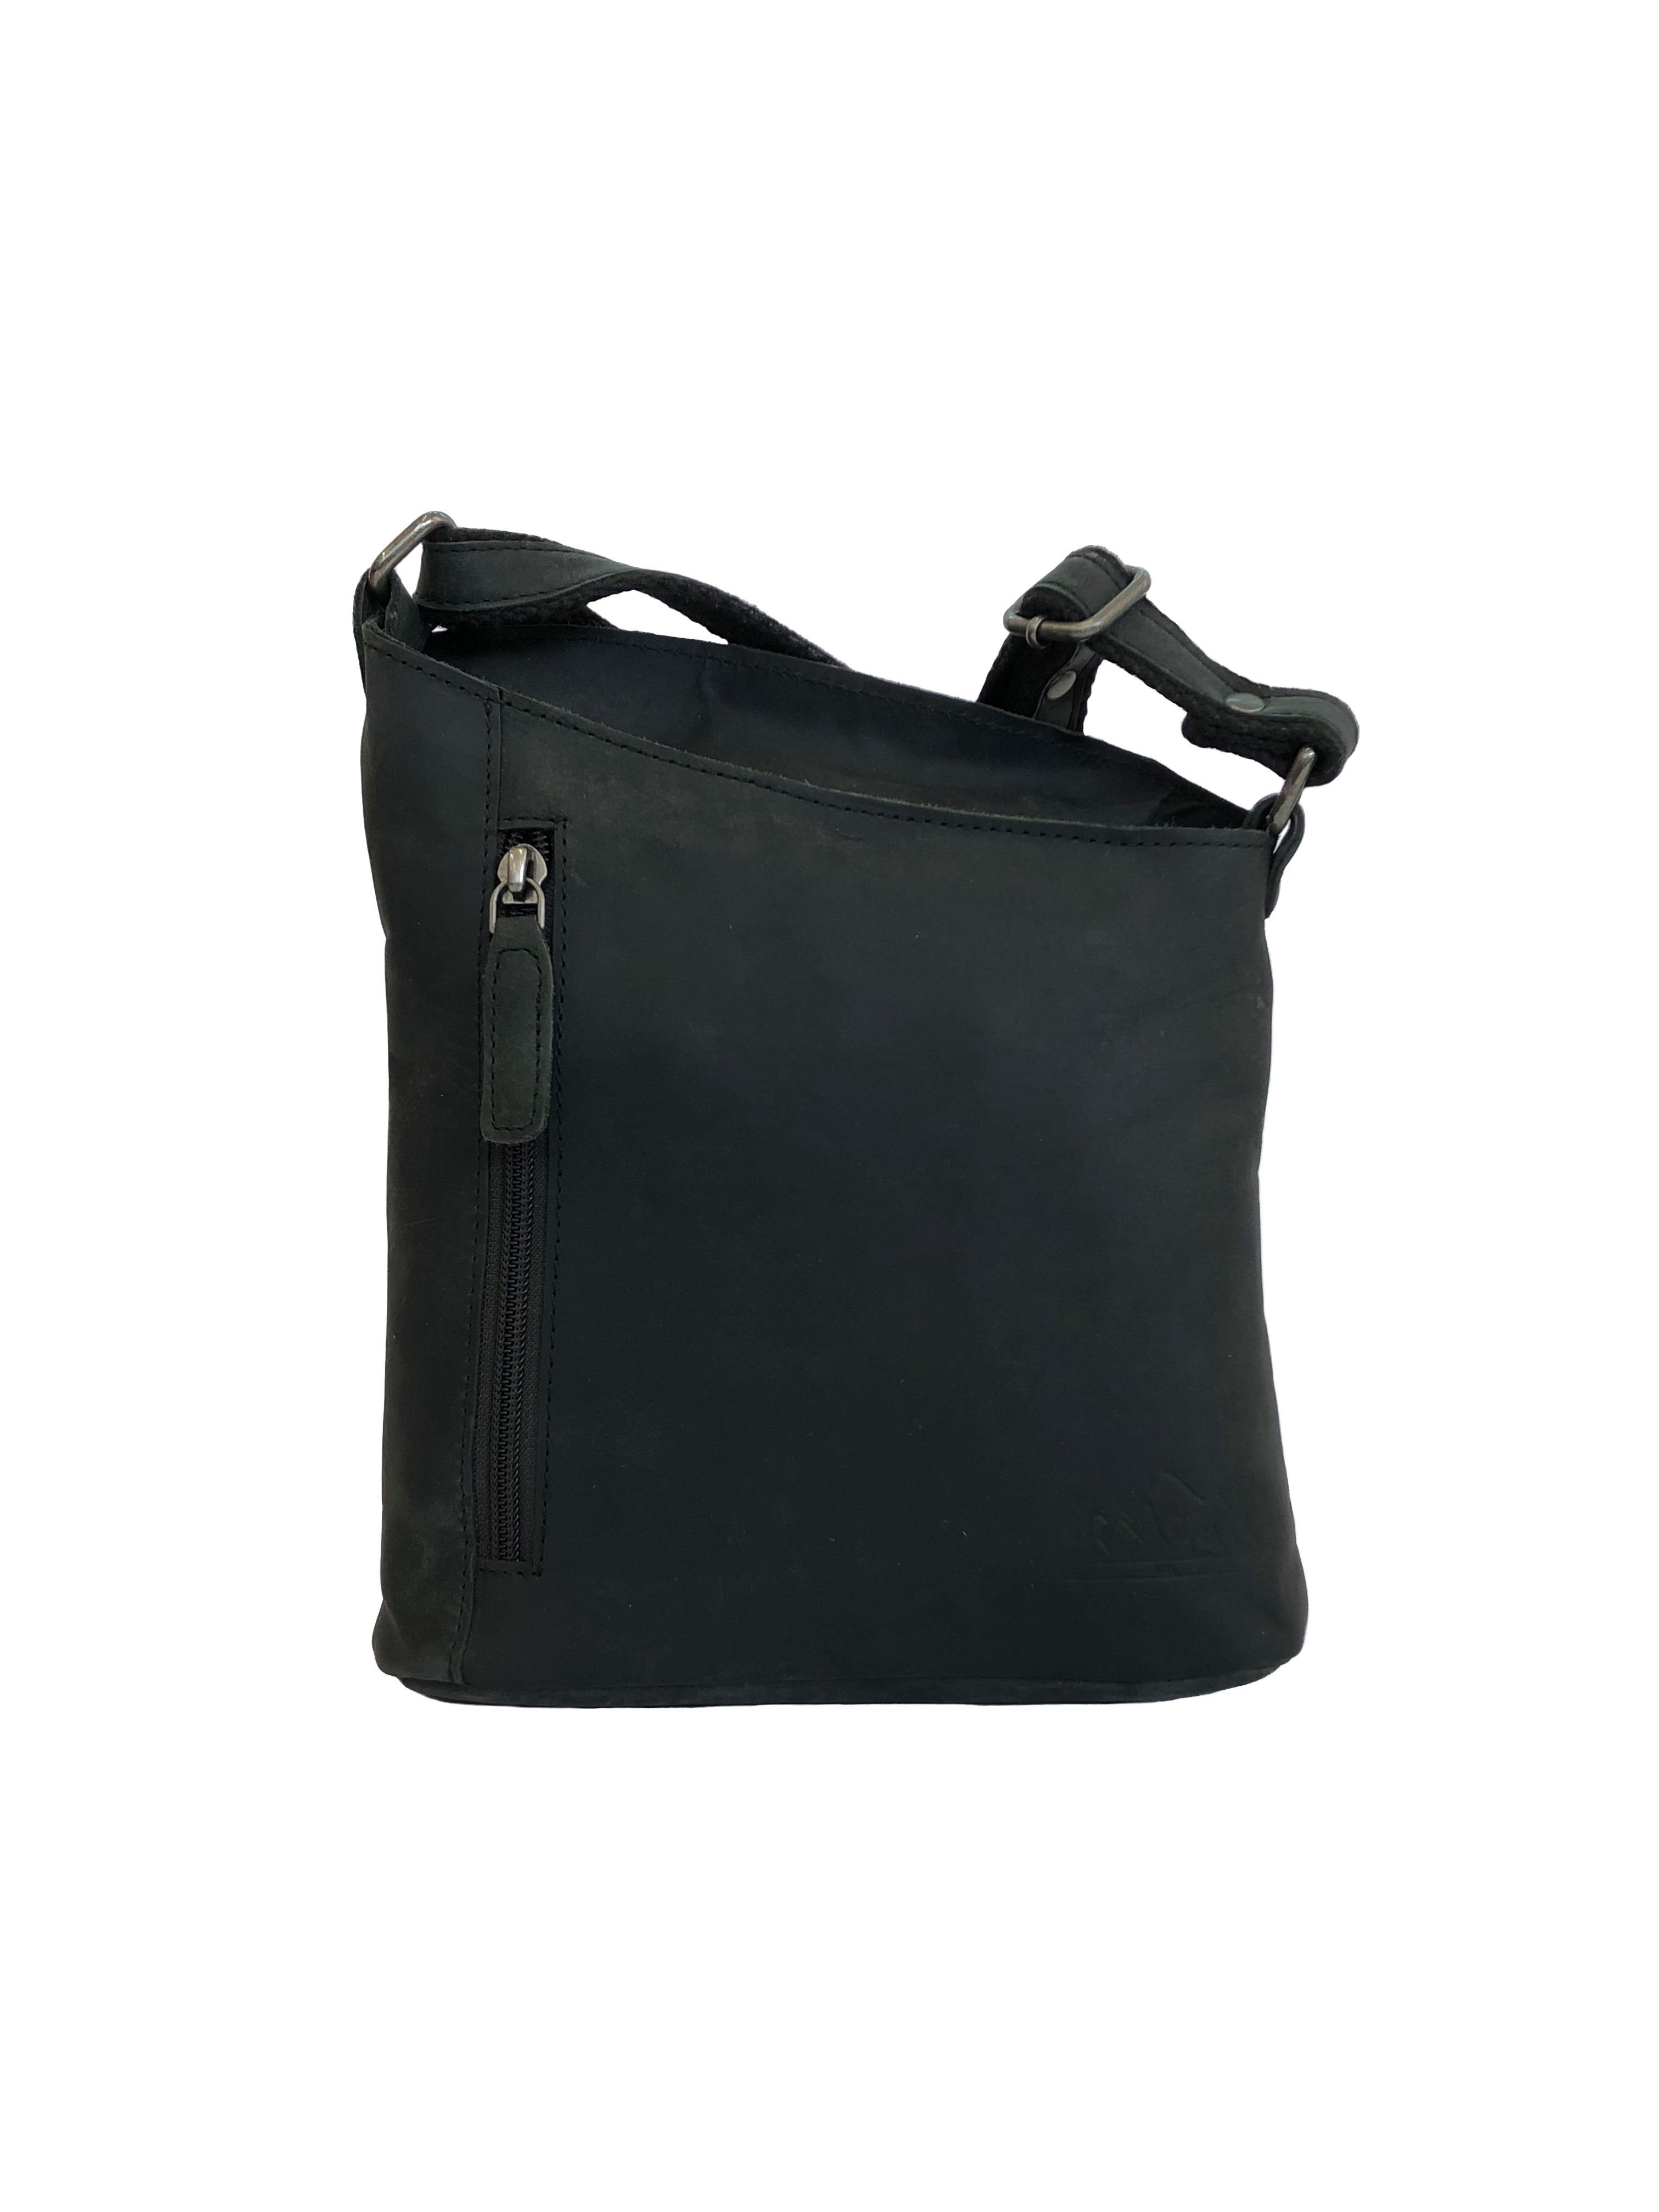 Black PAULA, Bag Bayern Umhängetasche Vintage Ledertasche Handtasche Crossbody Bag